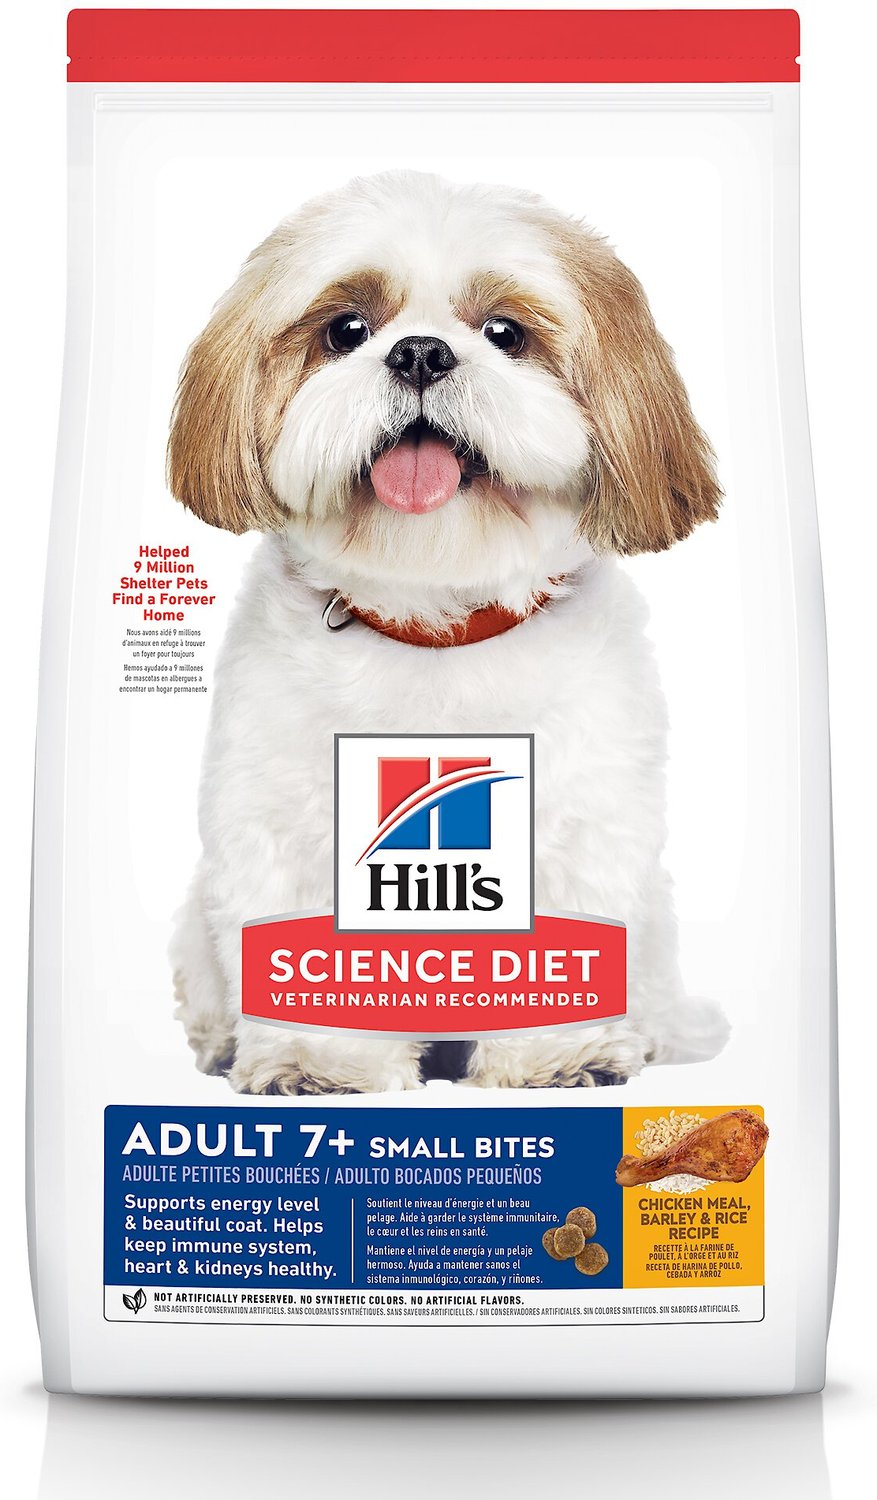 hills adult dog food